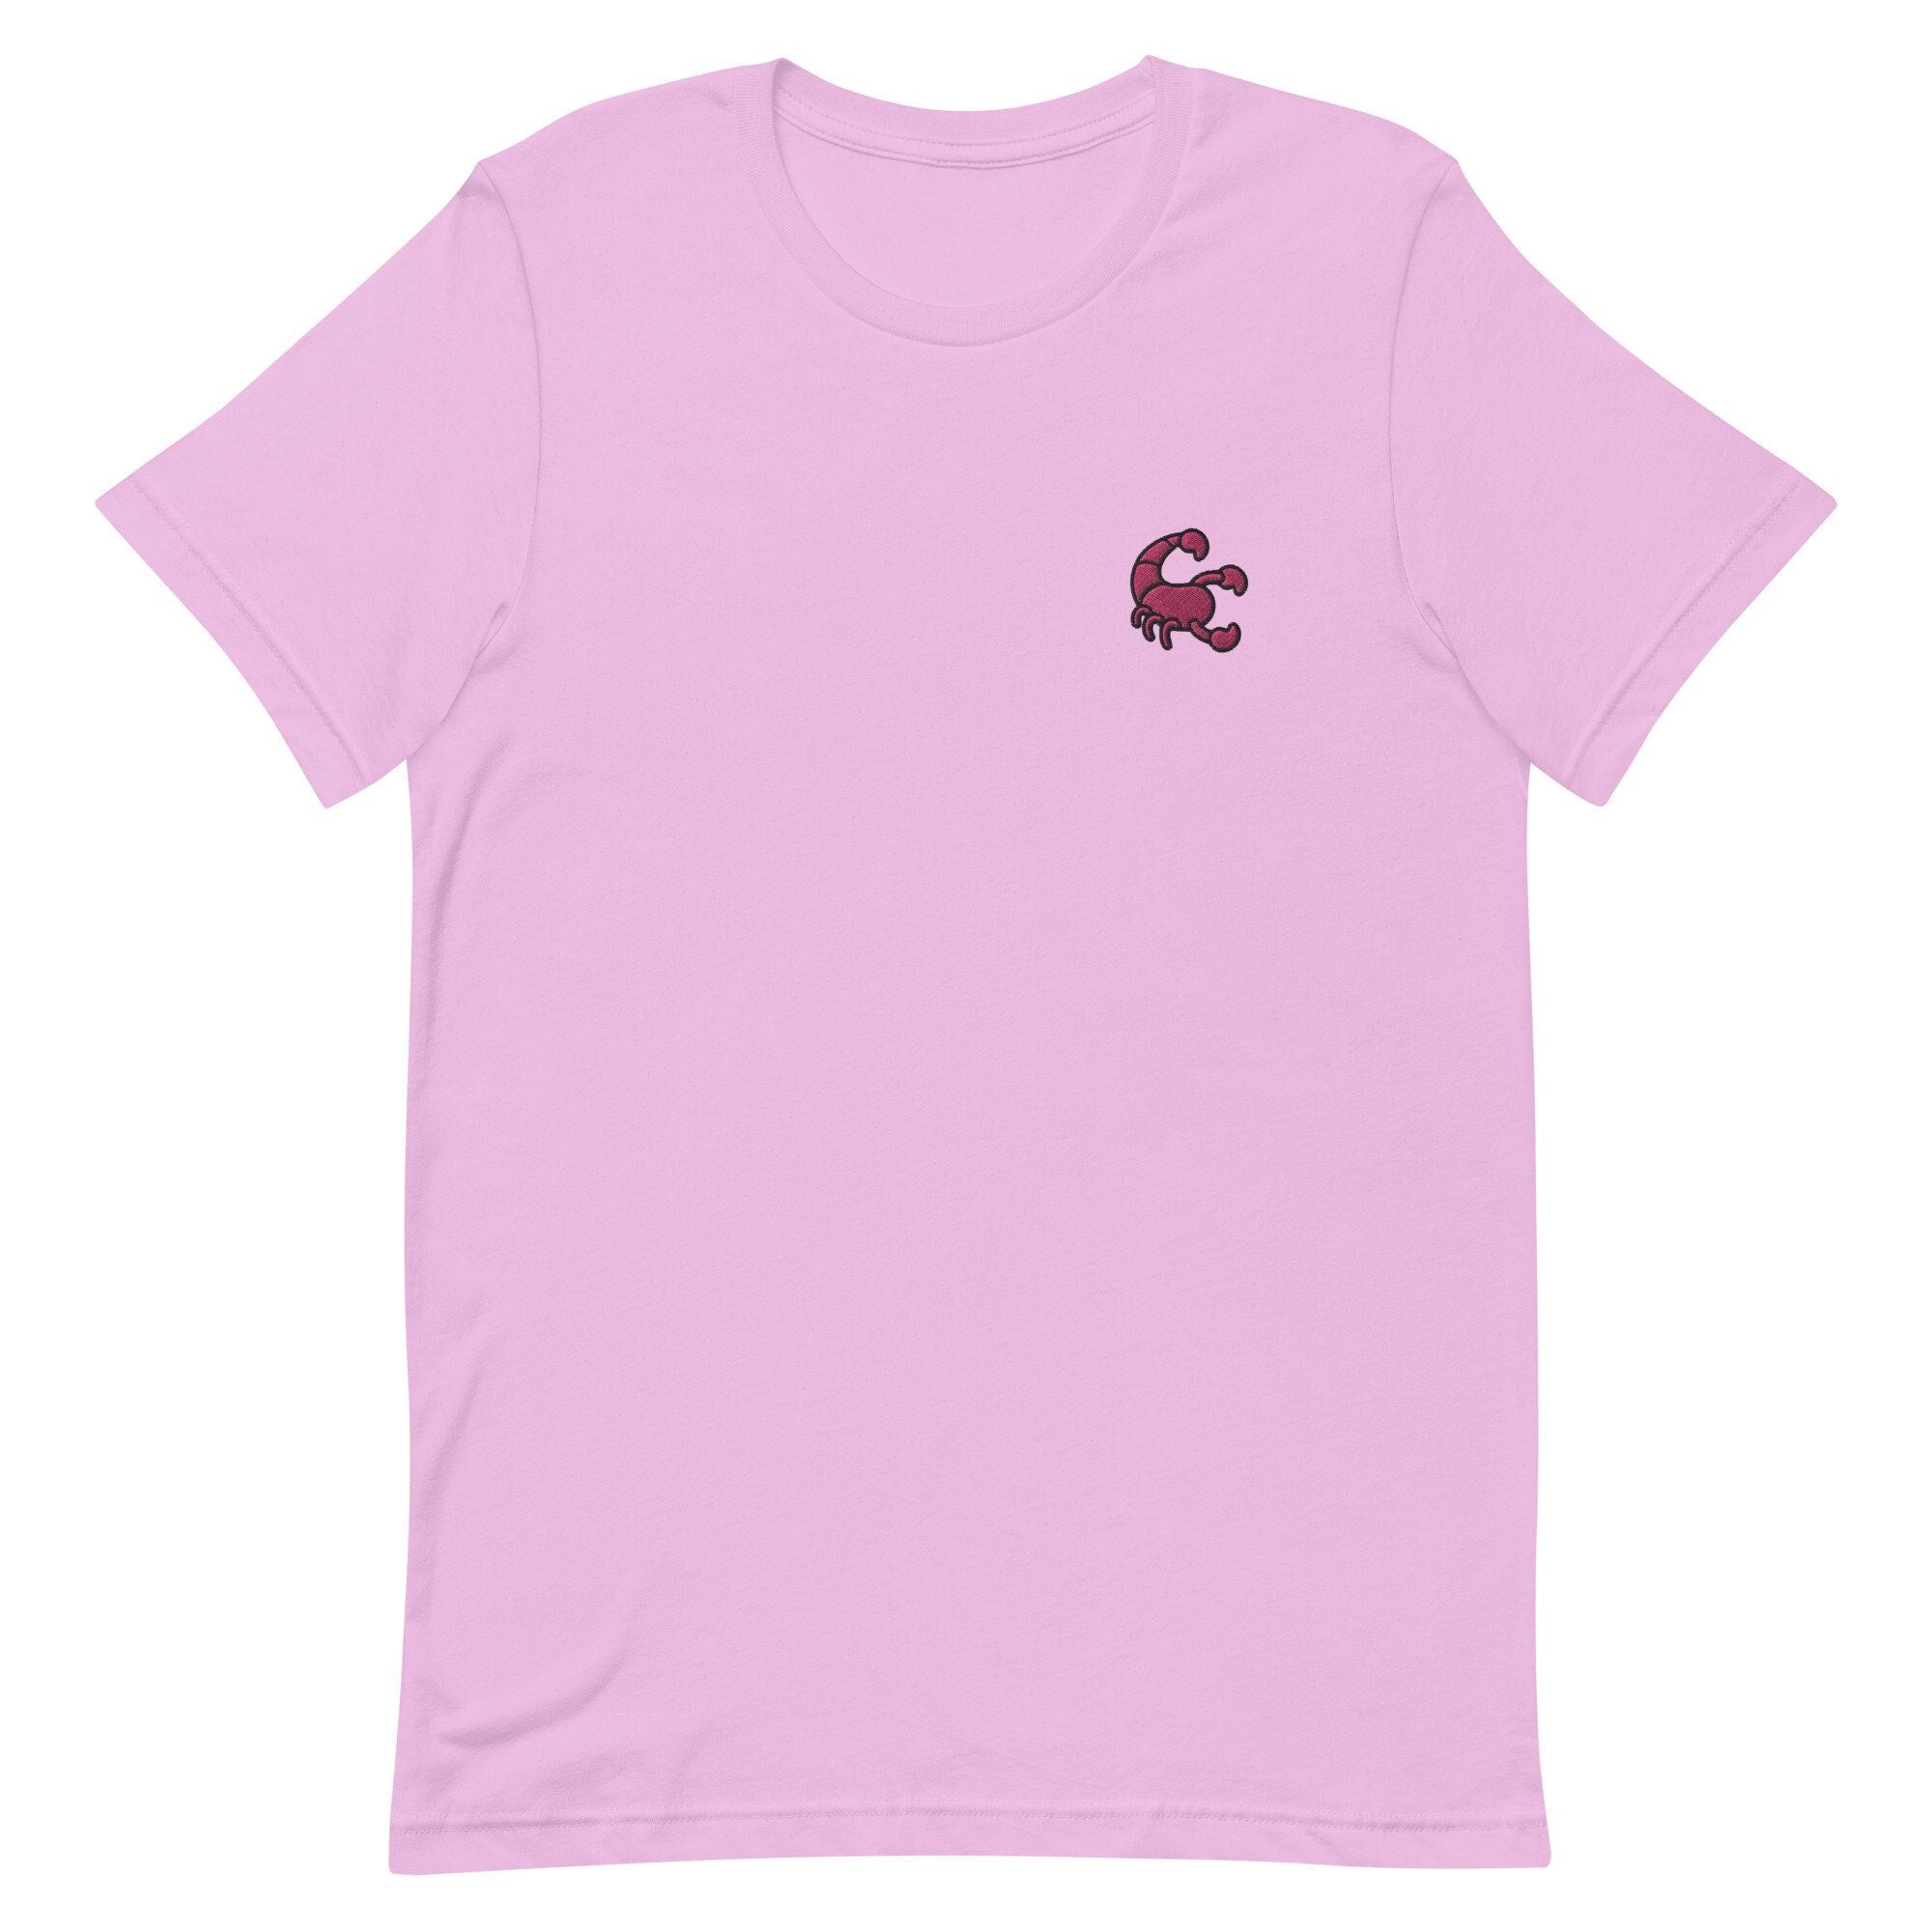 Scorpion Premium Men's T-Shirt, Embroidered Men's T-Shirt Gift for Boyfriend, Men's Short Sleeve Shirt - Multiple Colors